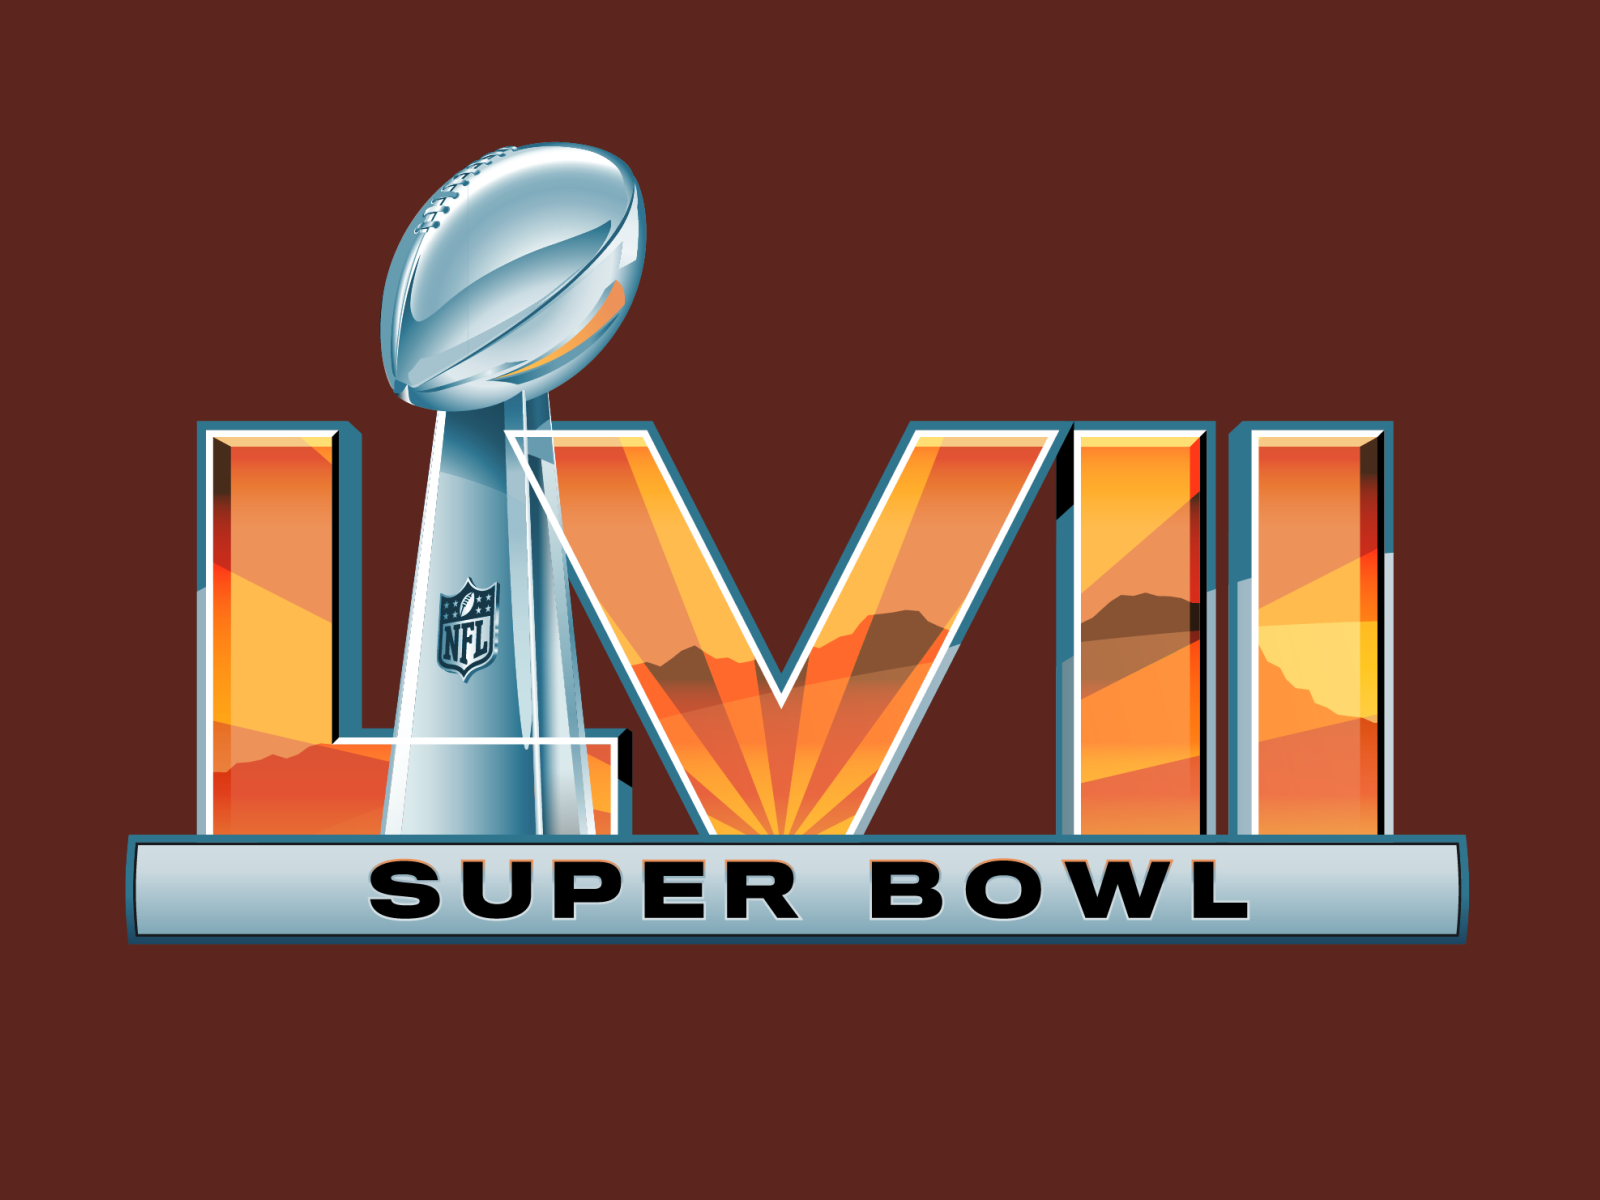 Супербоул LVII. Super Bowl 2023. Super Bowl LVII логотип. Финал супербоул. Super bowl show